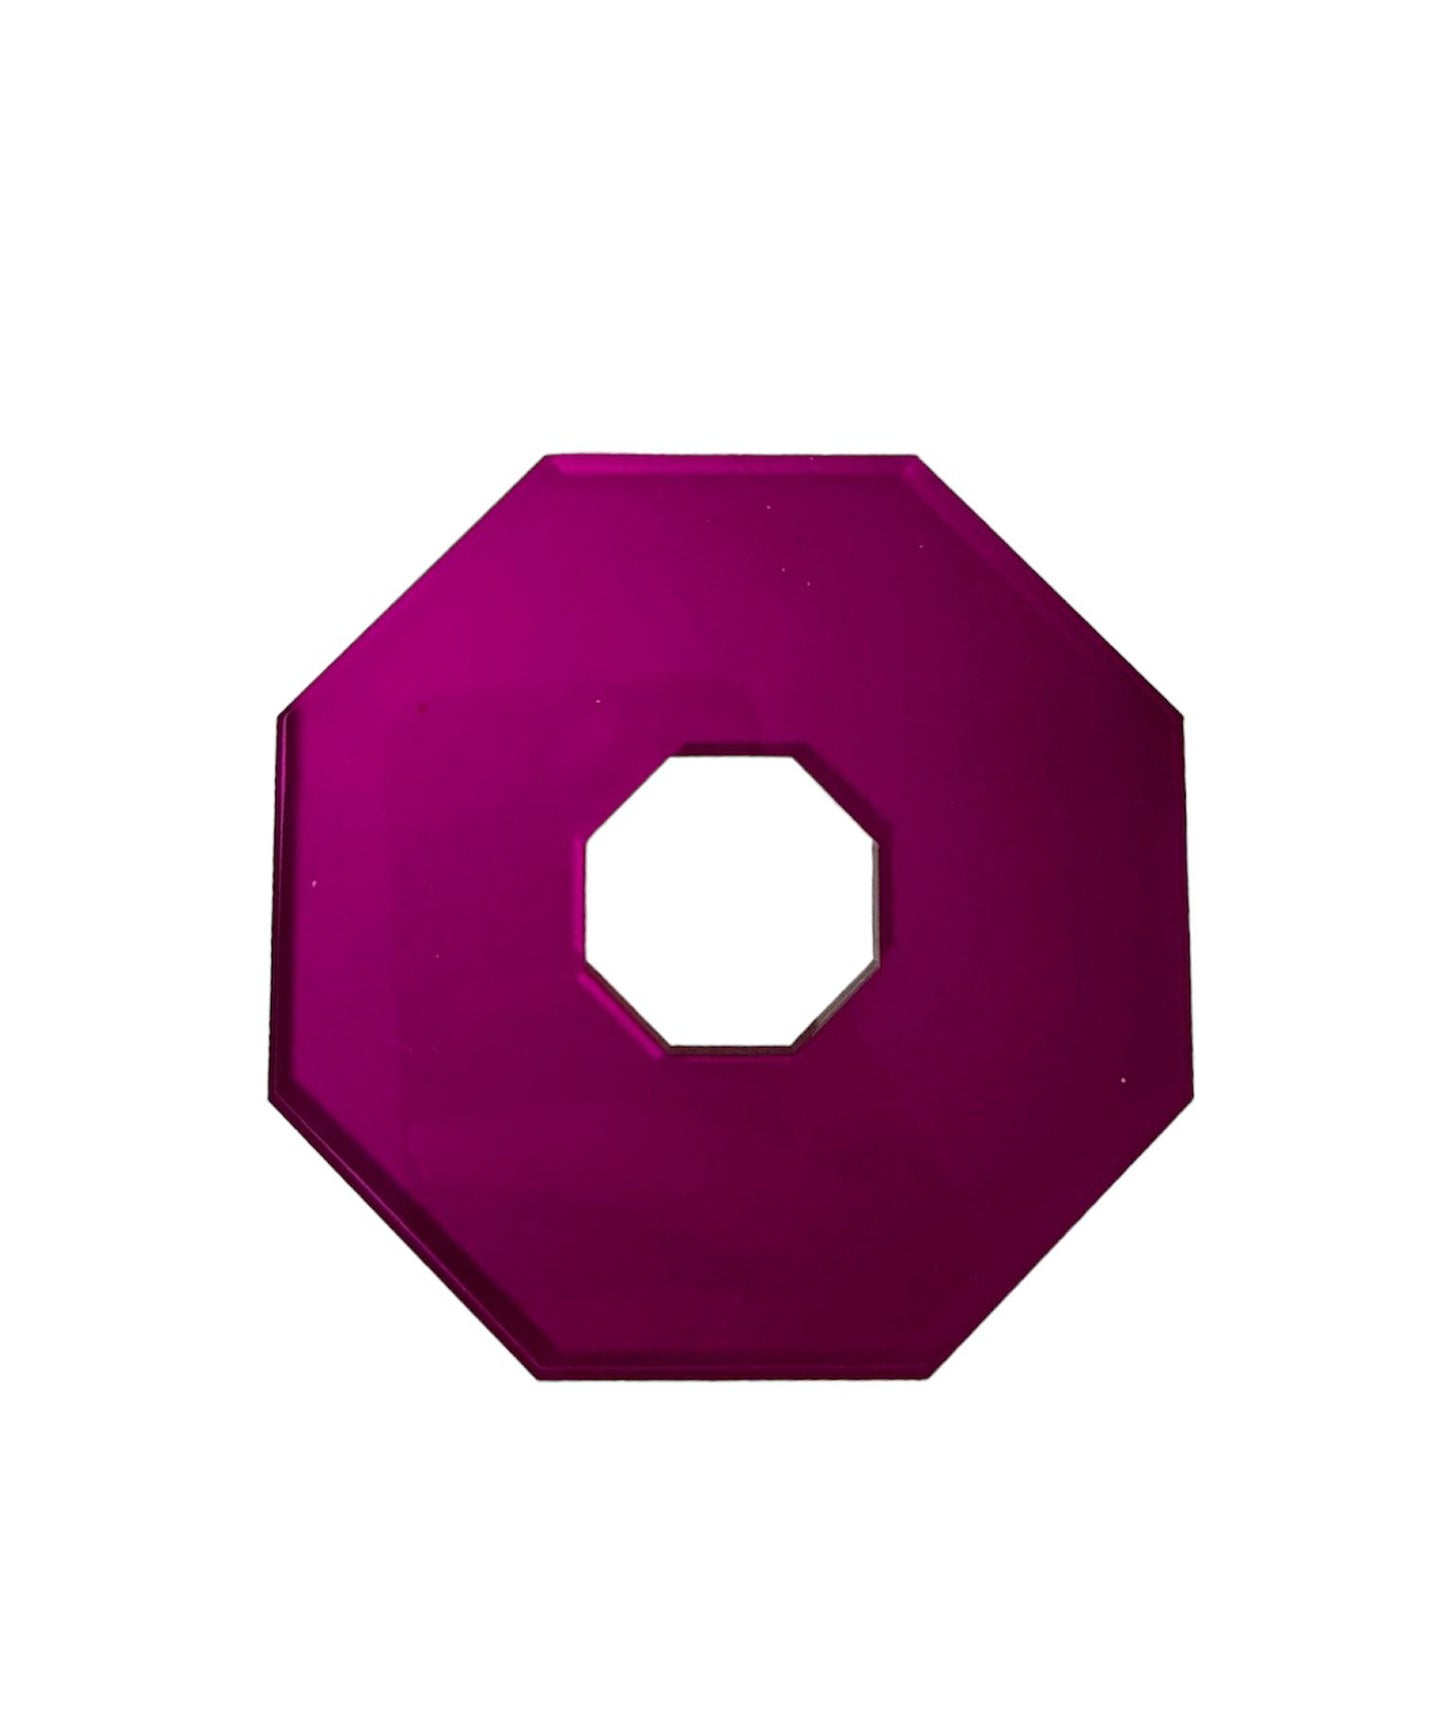 Akrilik Hexagon Napkin Rings